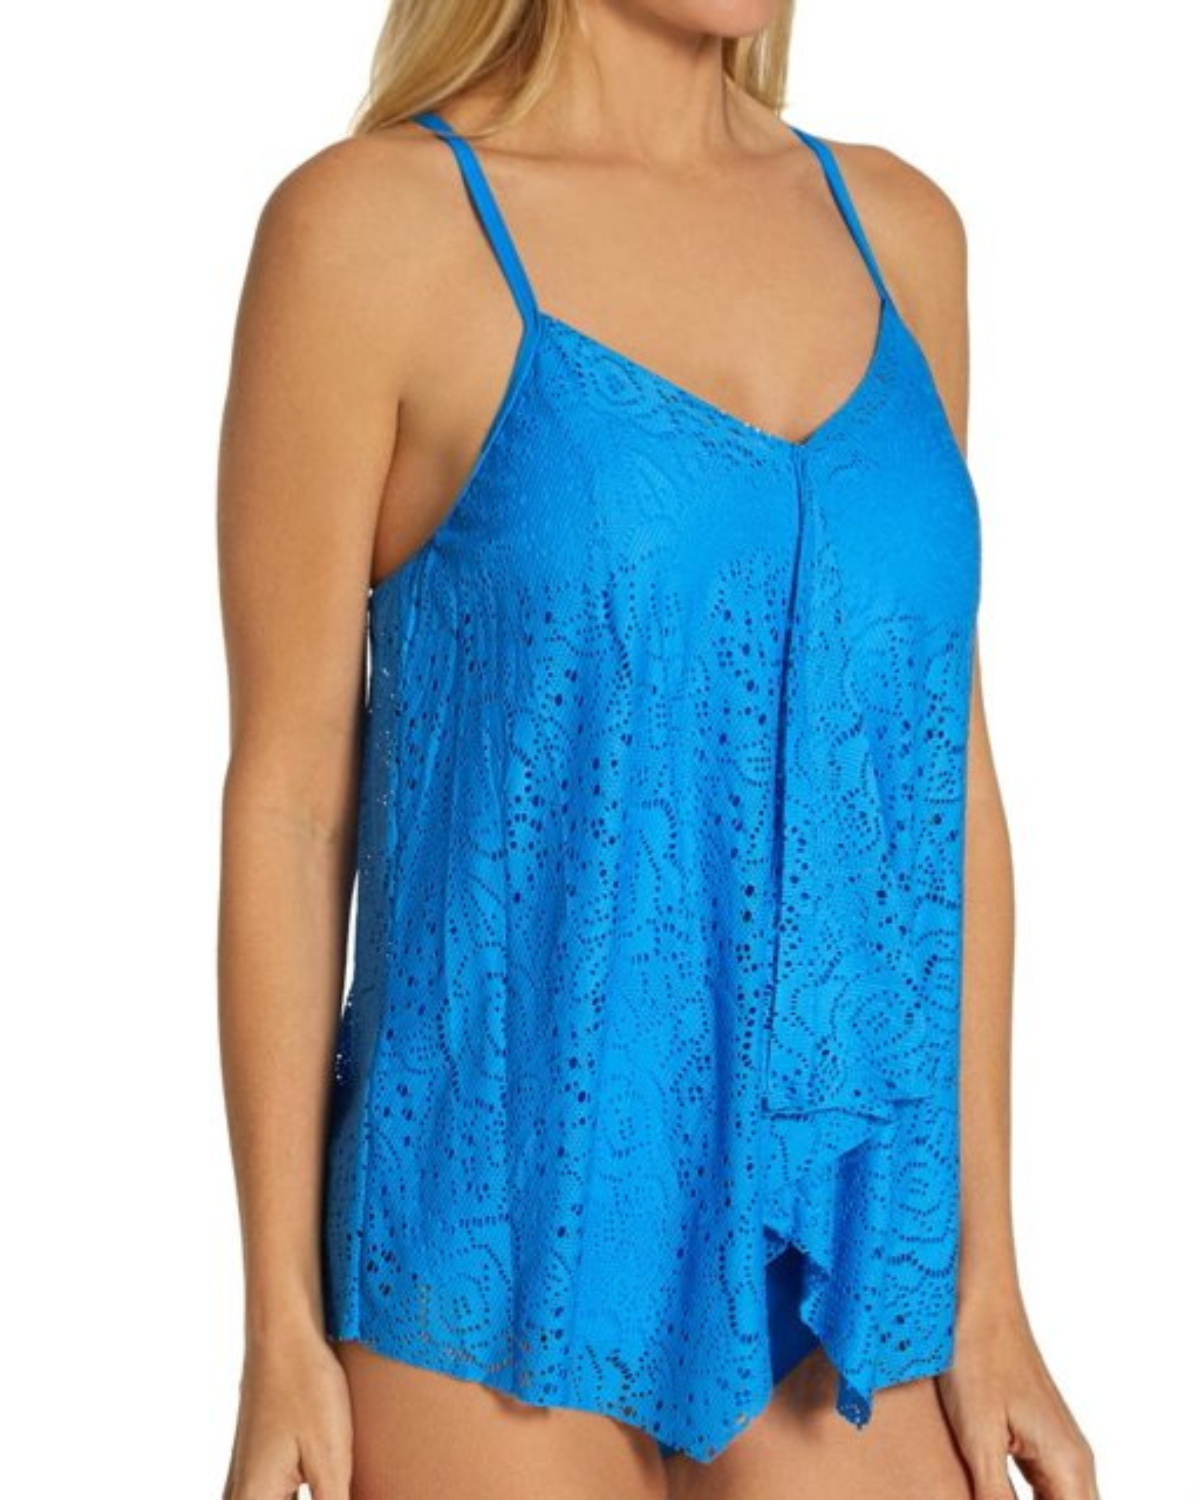 Model wearing a layered crochet tankini top in blue